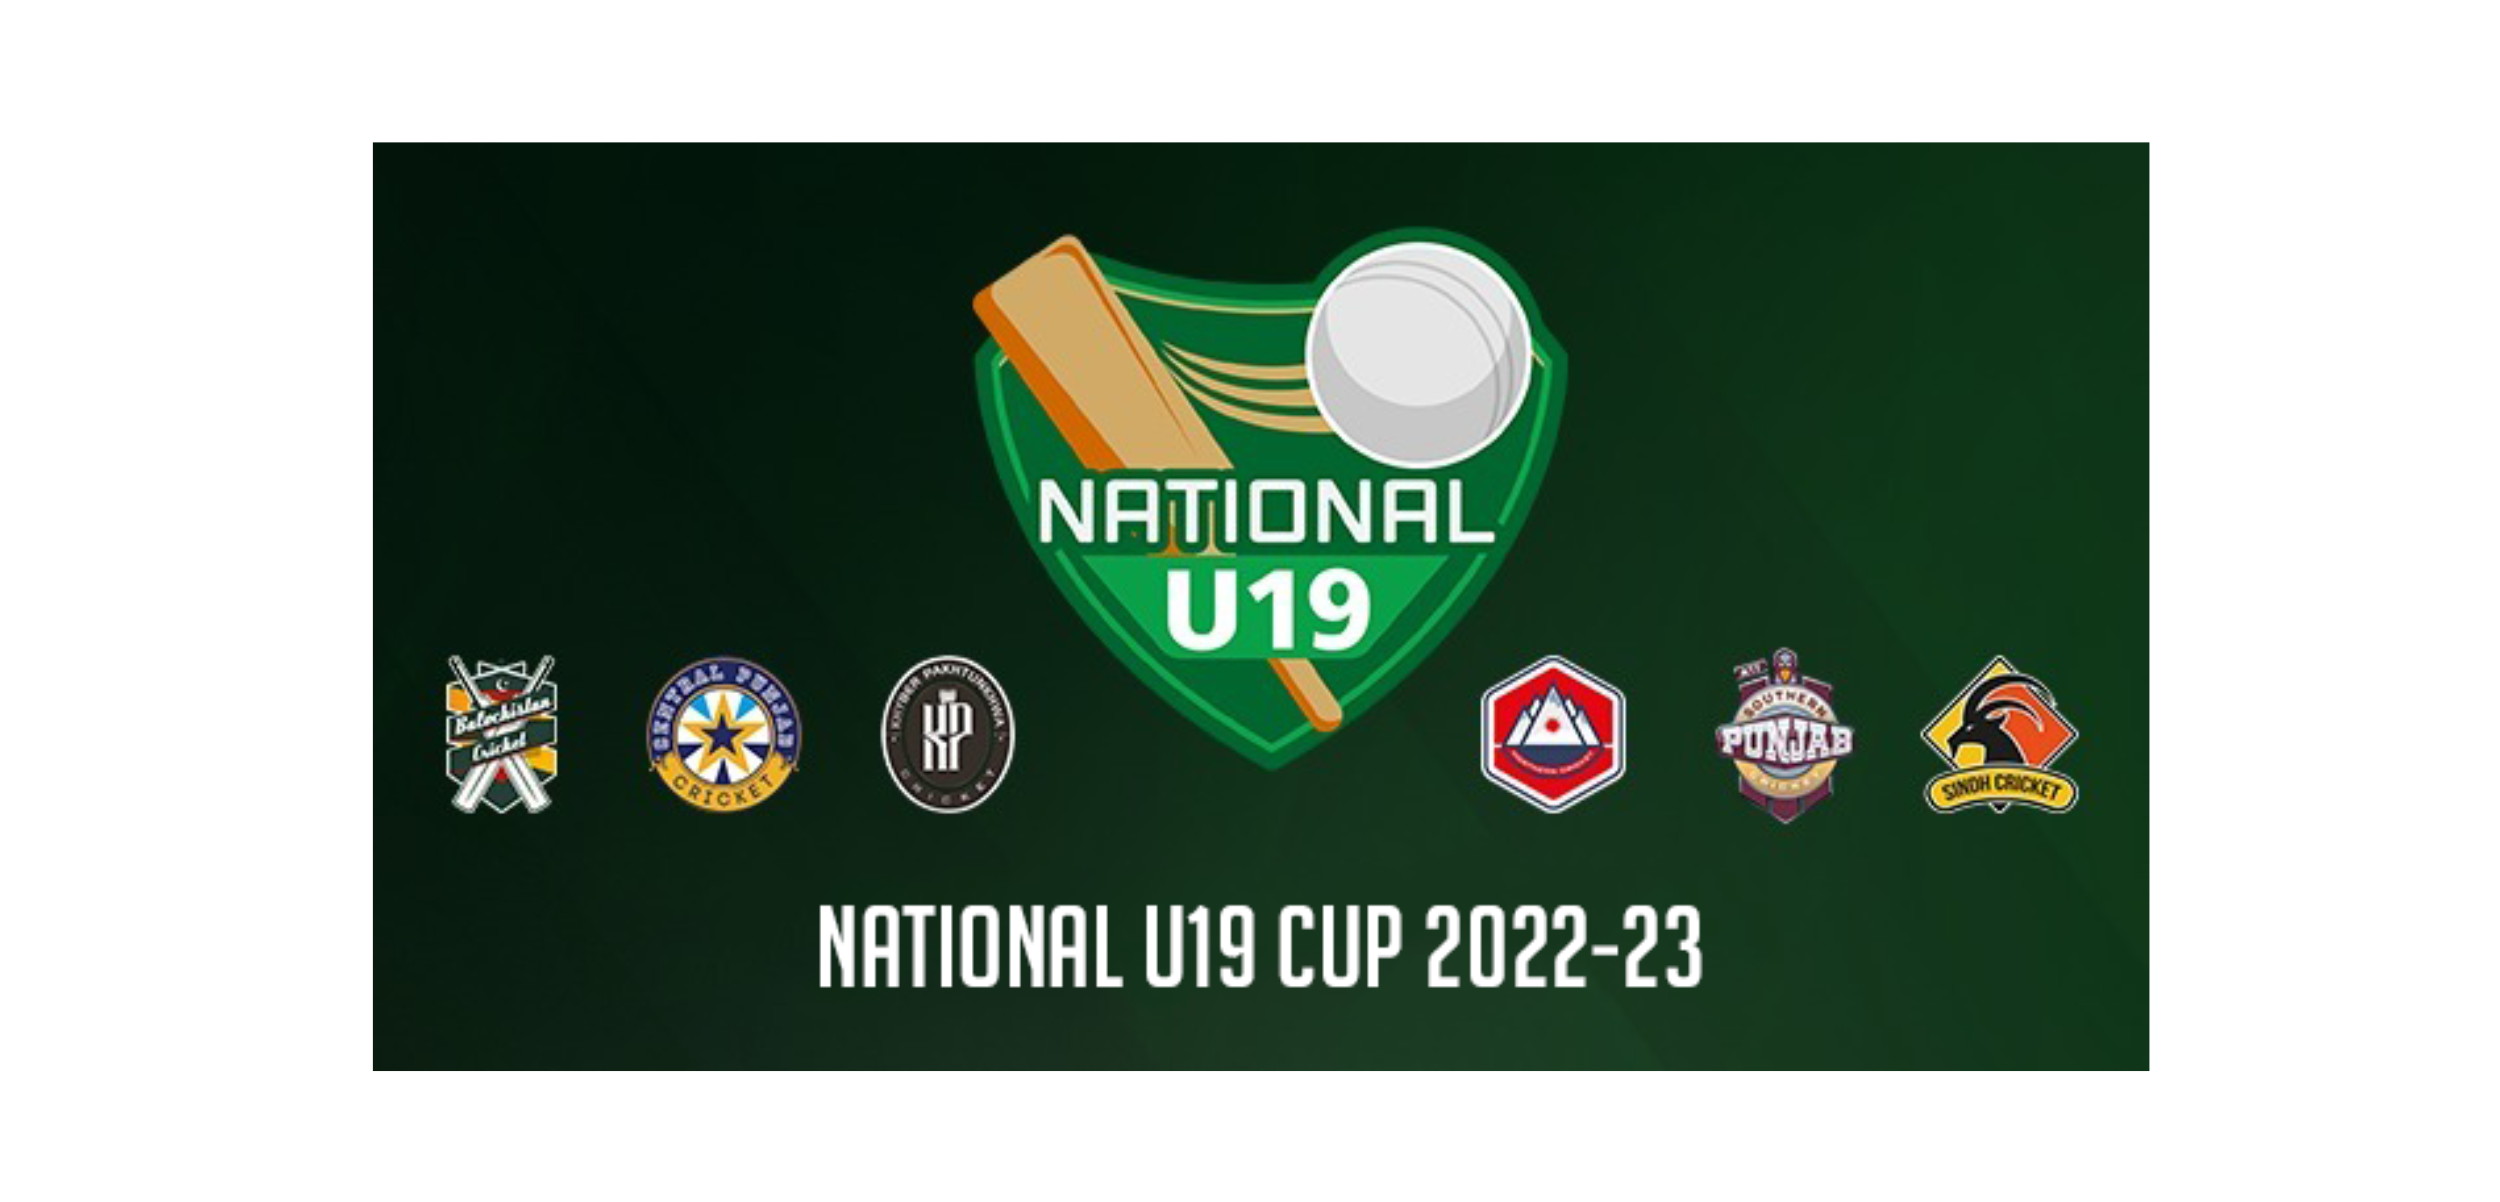 PCB: National U19 Cup schedule and squads announced